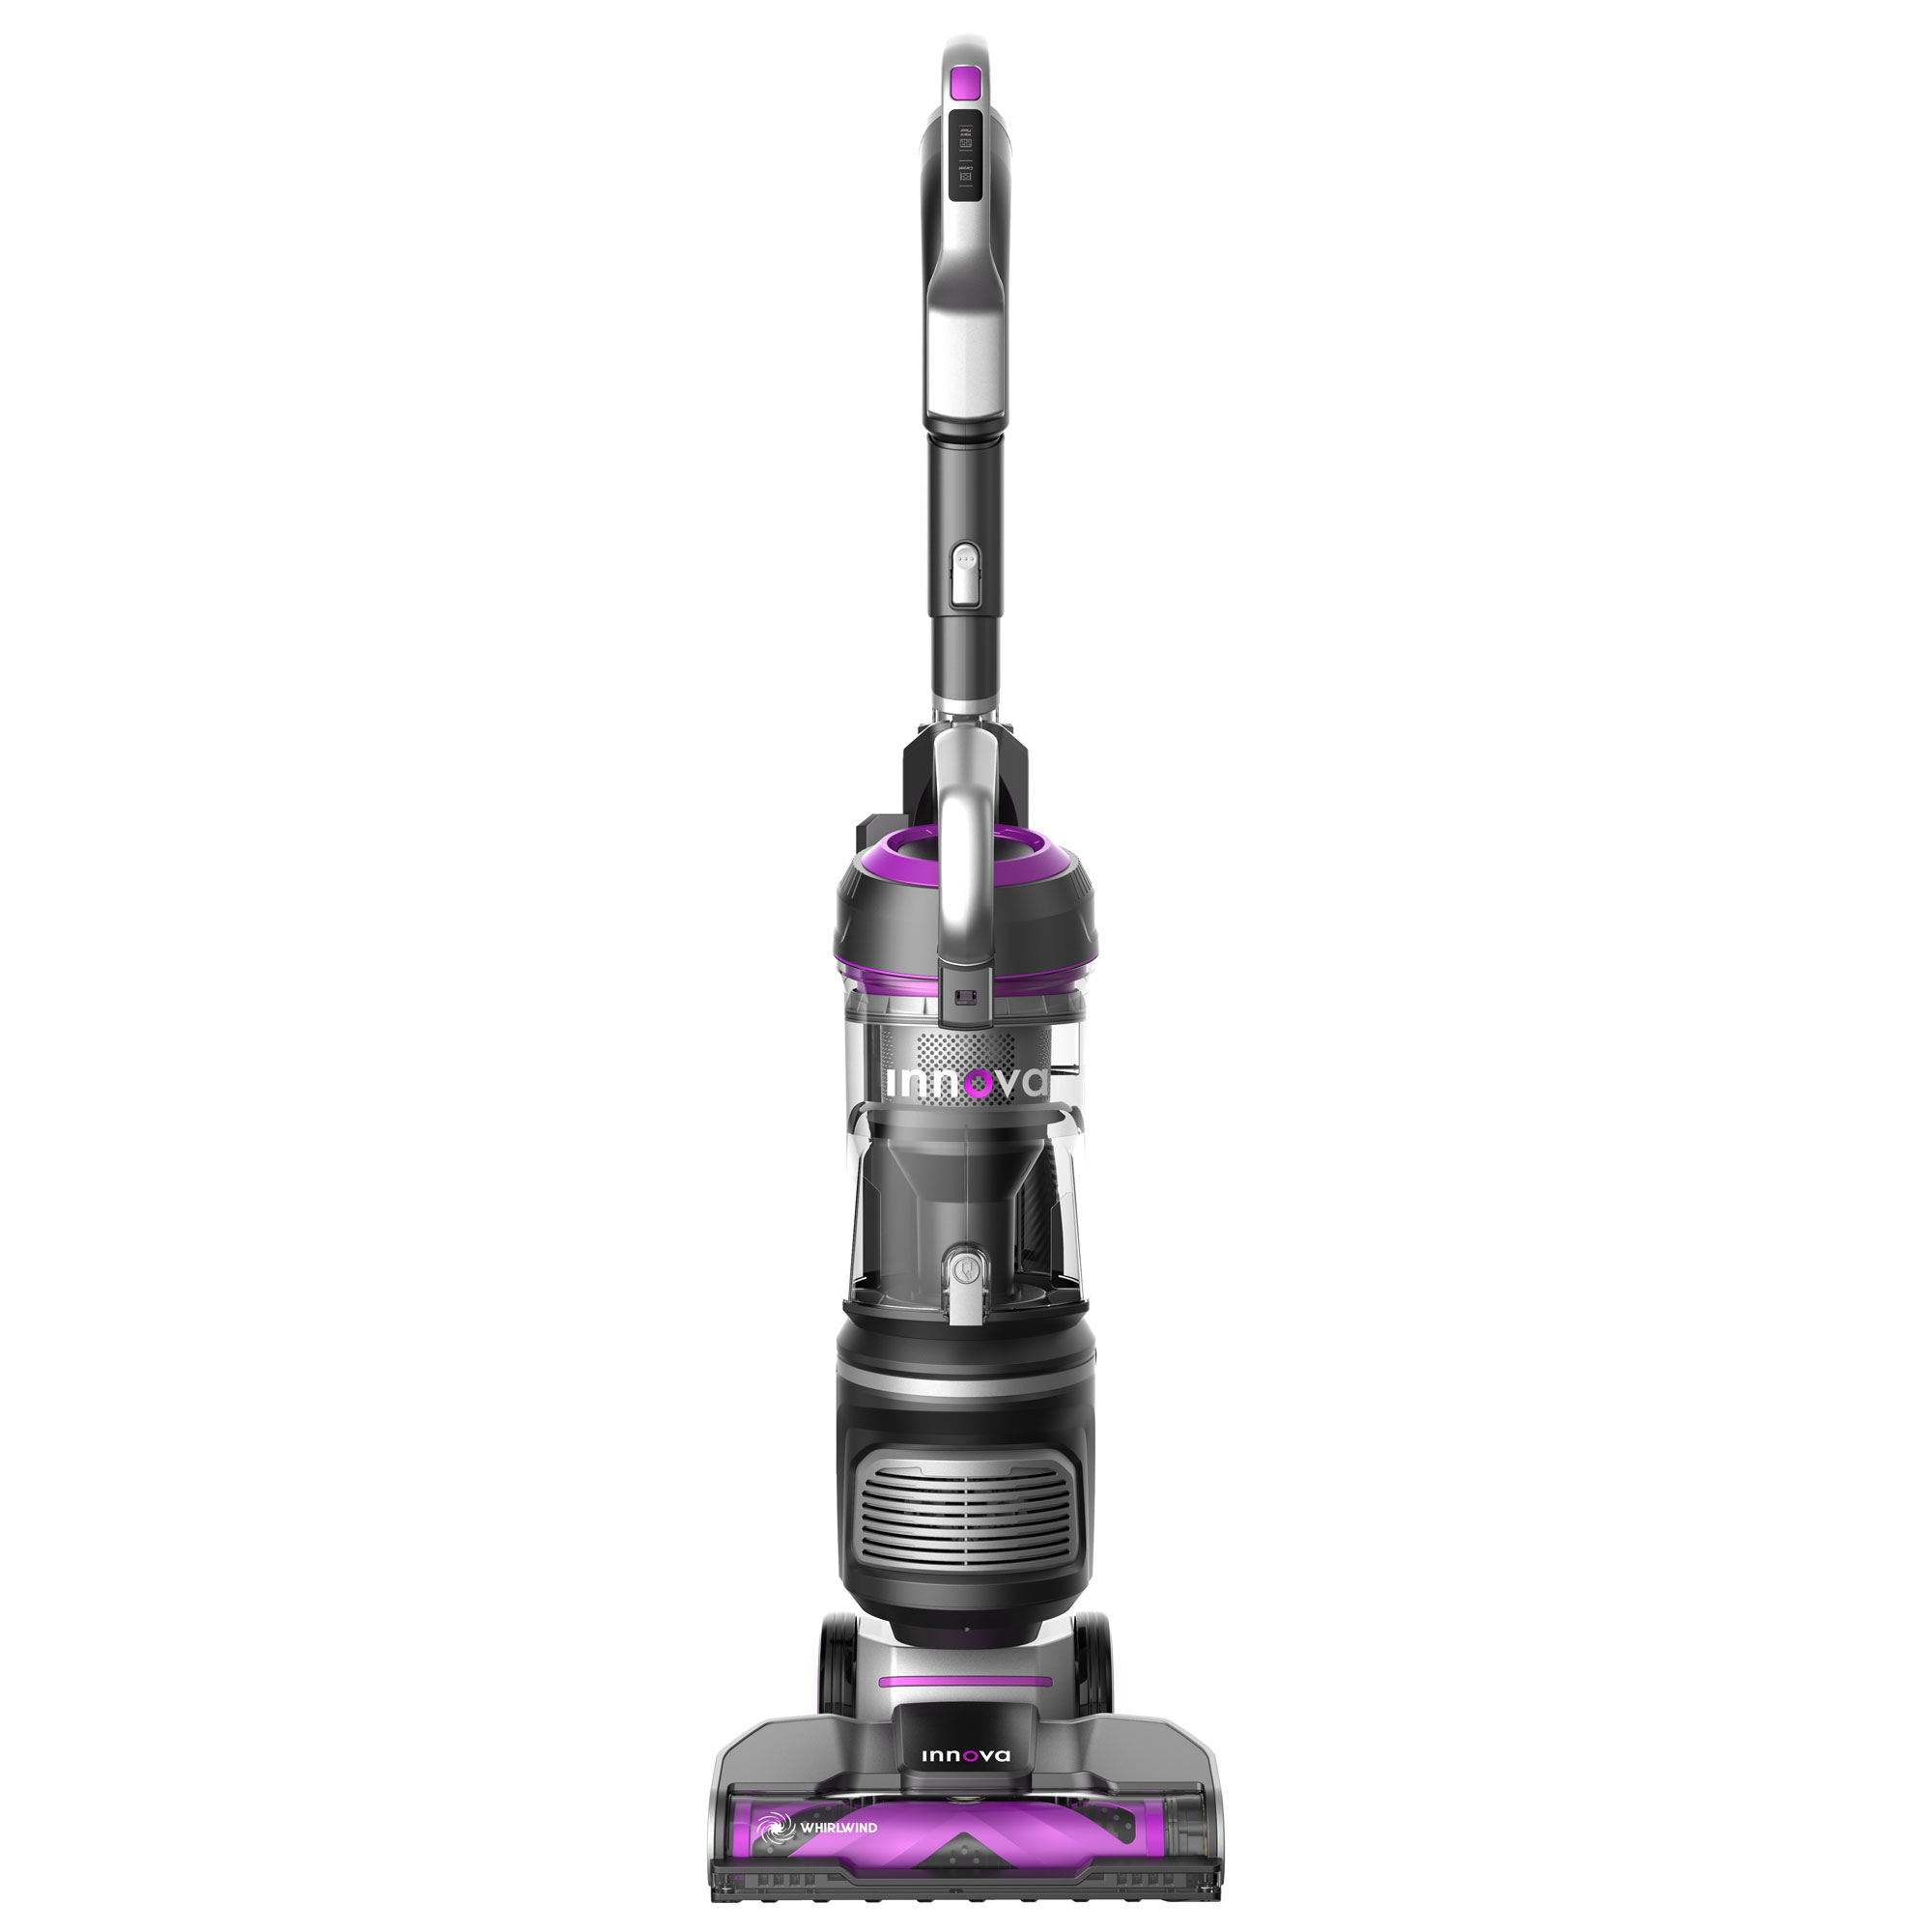 Innova by Eureka Upright Vacuum with Whirlwind Anti-Tangle Technology, NEU700 - image 1 of 14